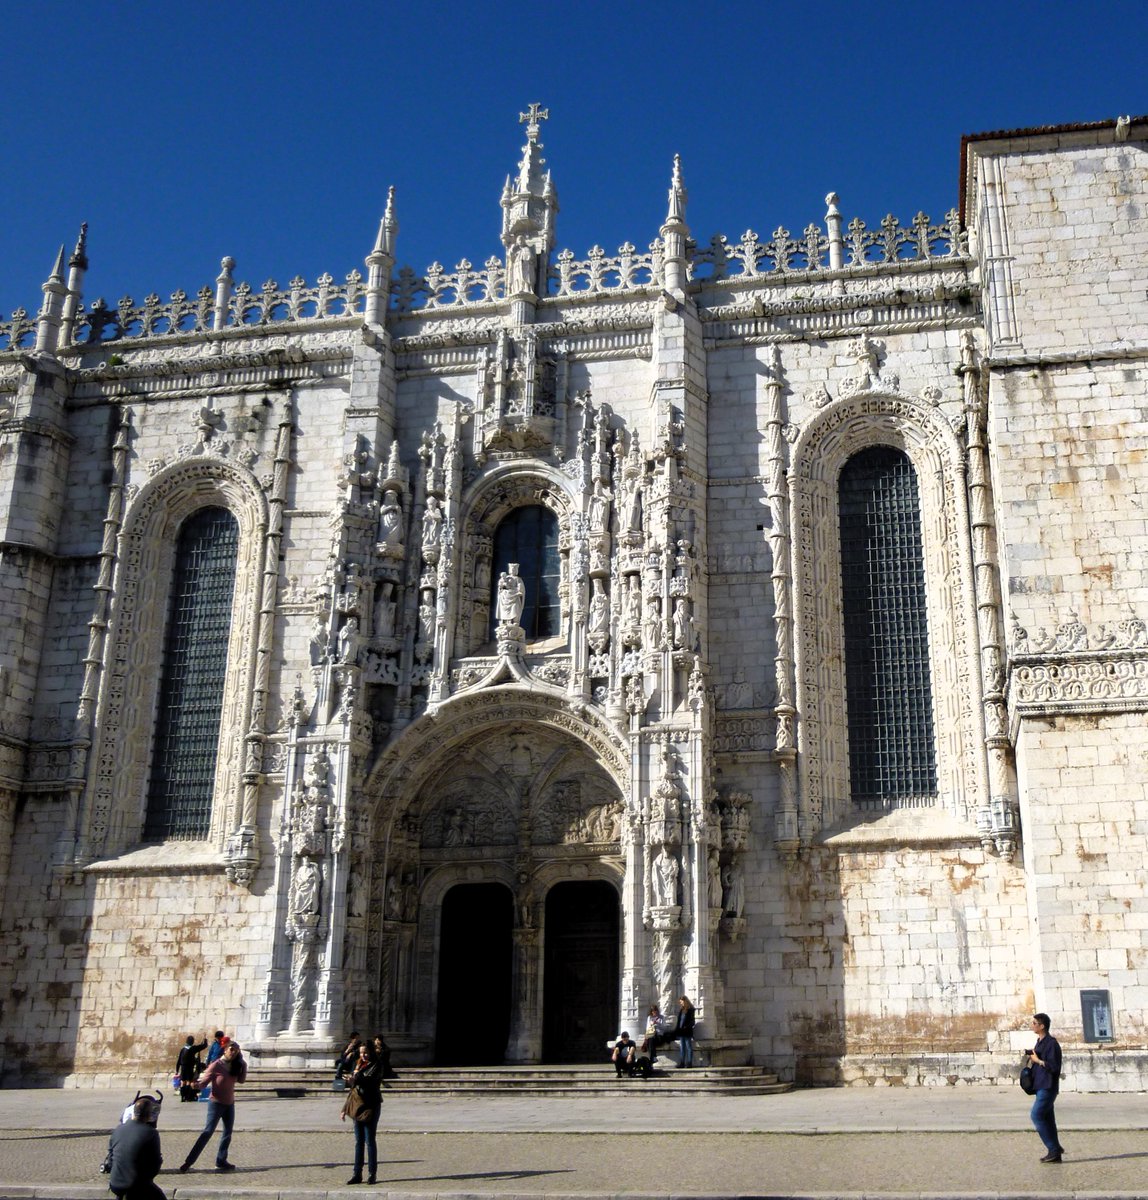 #DailyDoor #NoContextDoors #JeronimosMonastery #Belem #portugal completed 1495 in #PortugueseGothic style, very elaborate & imposing